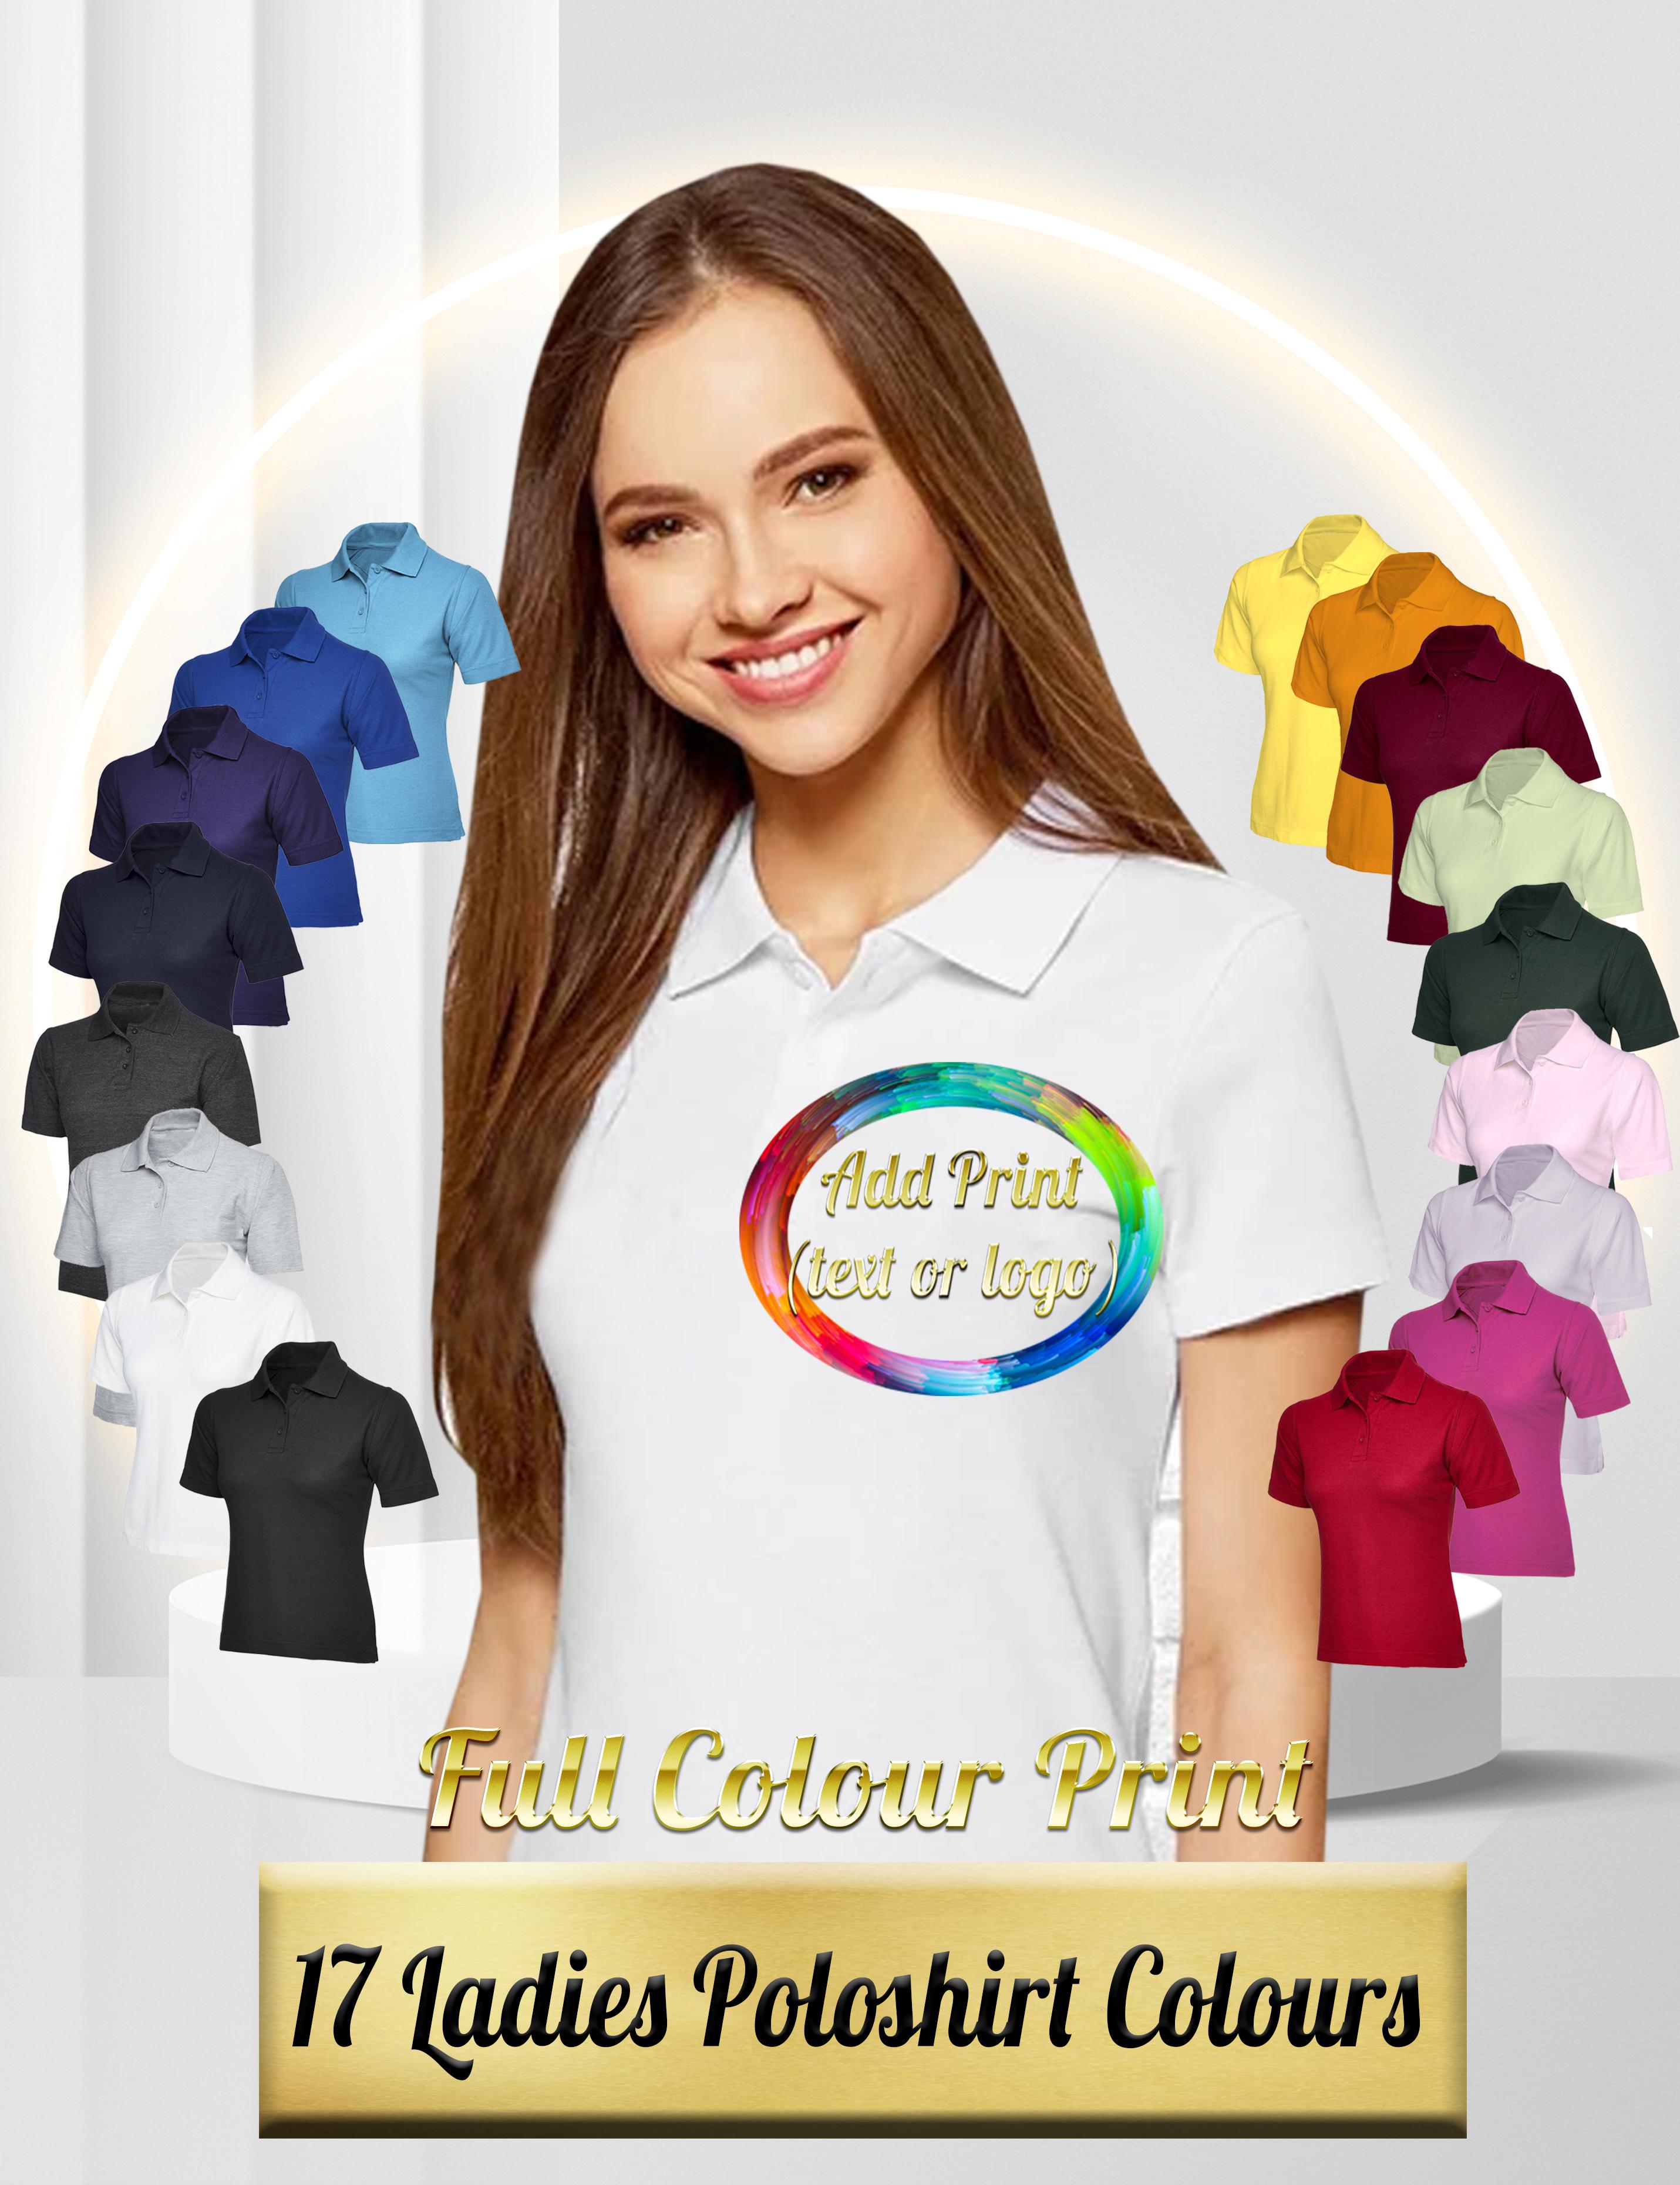 Full Colour Printed Women's Polo Shirt